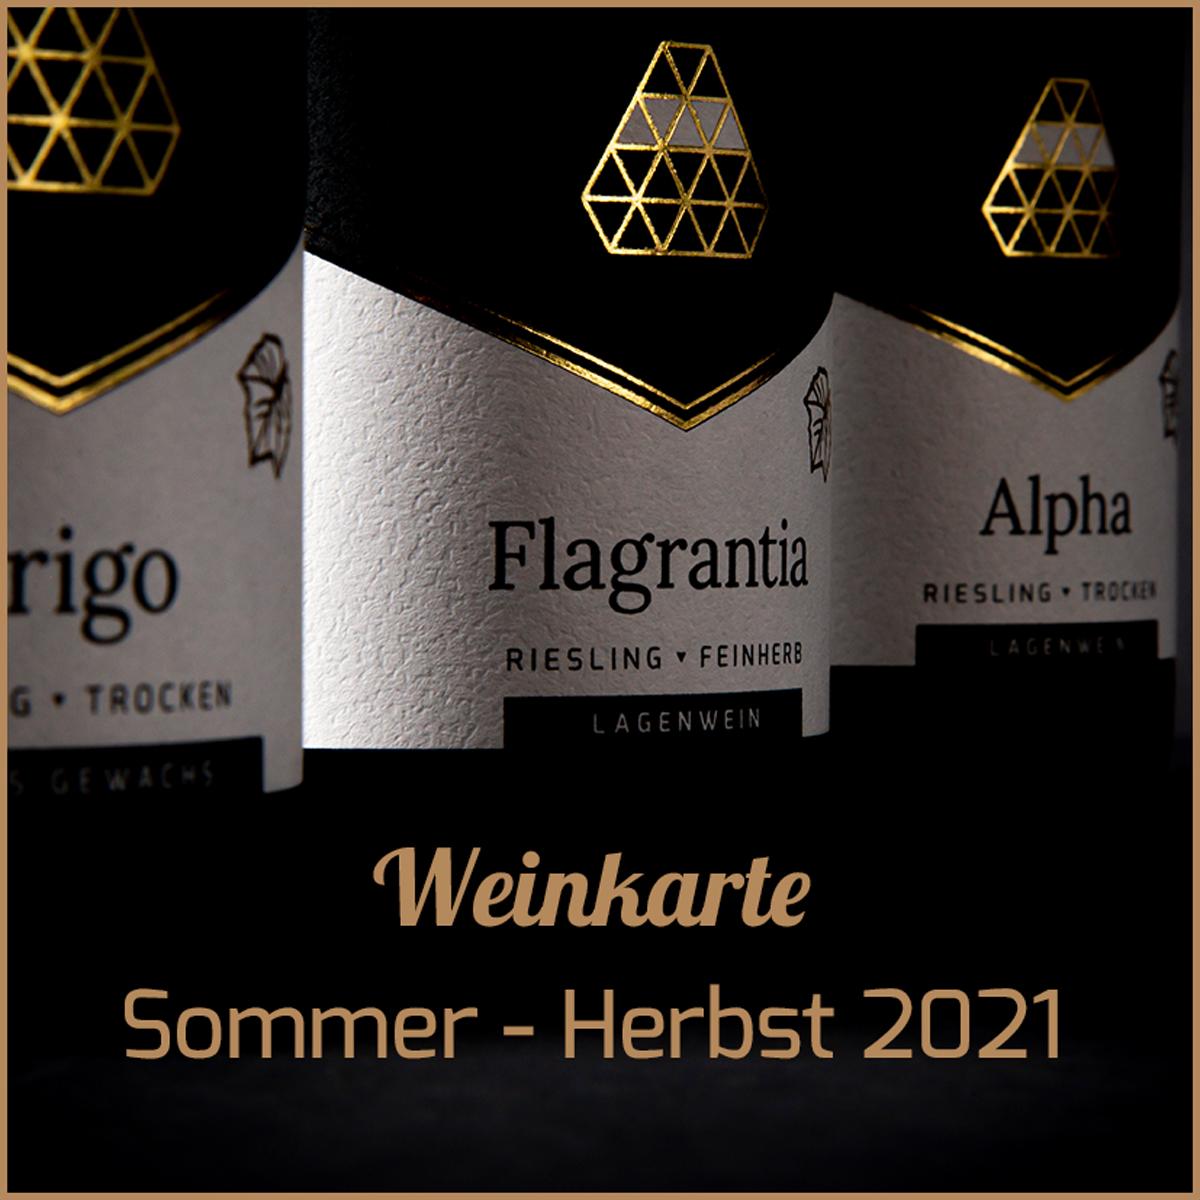 Weinkarte Sommer - Herbst 2021